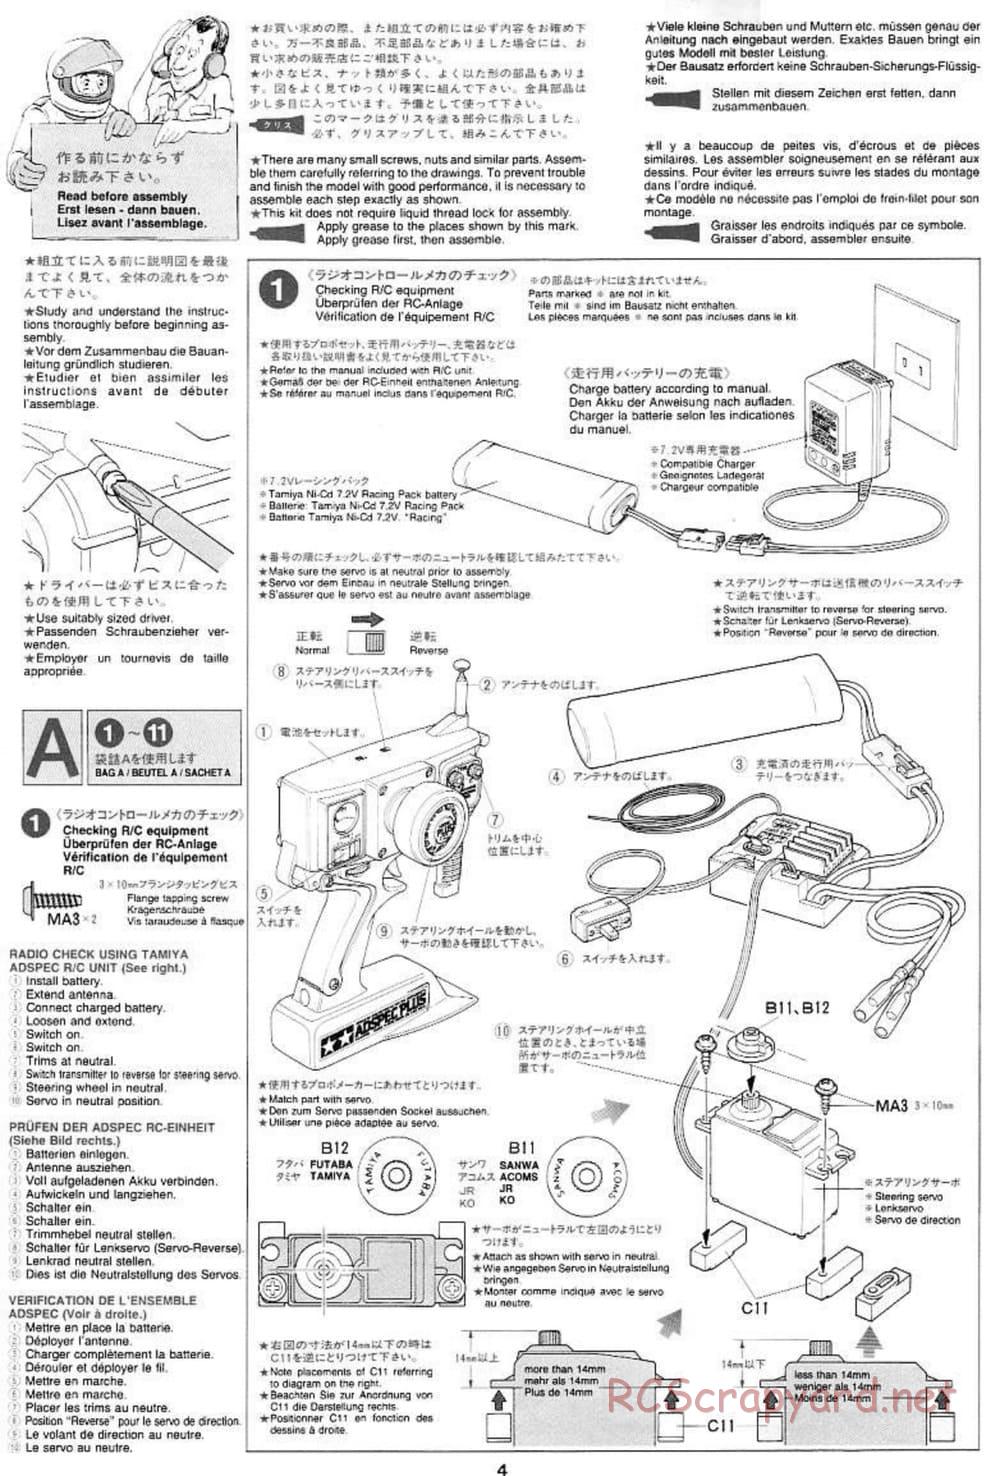 Tamiya - Subaru Impreza WRC - TL-01 Chassis - Manual - Page 4